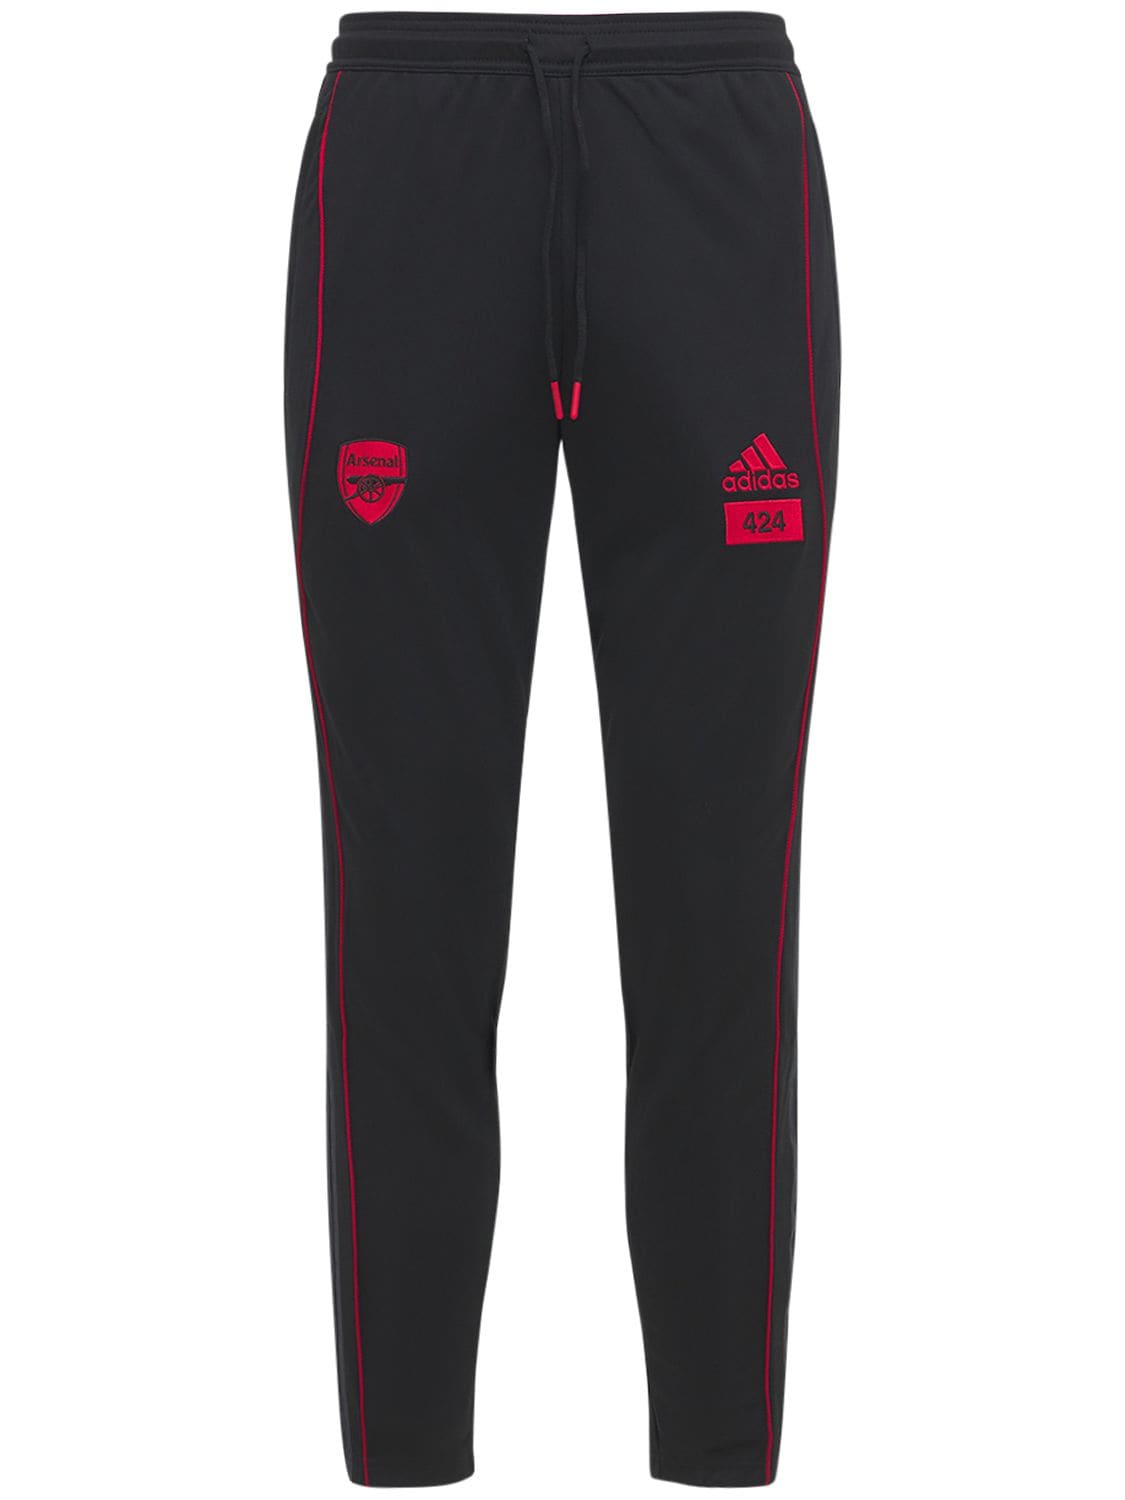 Adidas Originals Statement Afc X 424 Sweatpants In Black